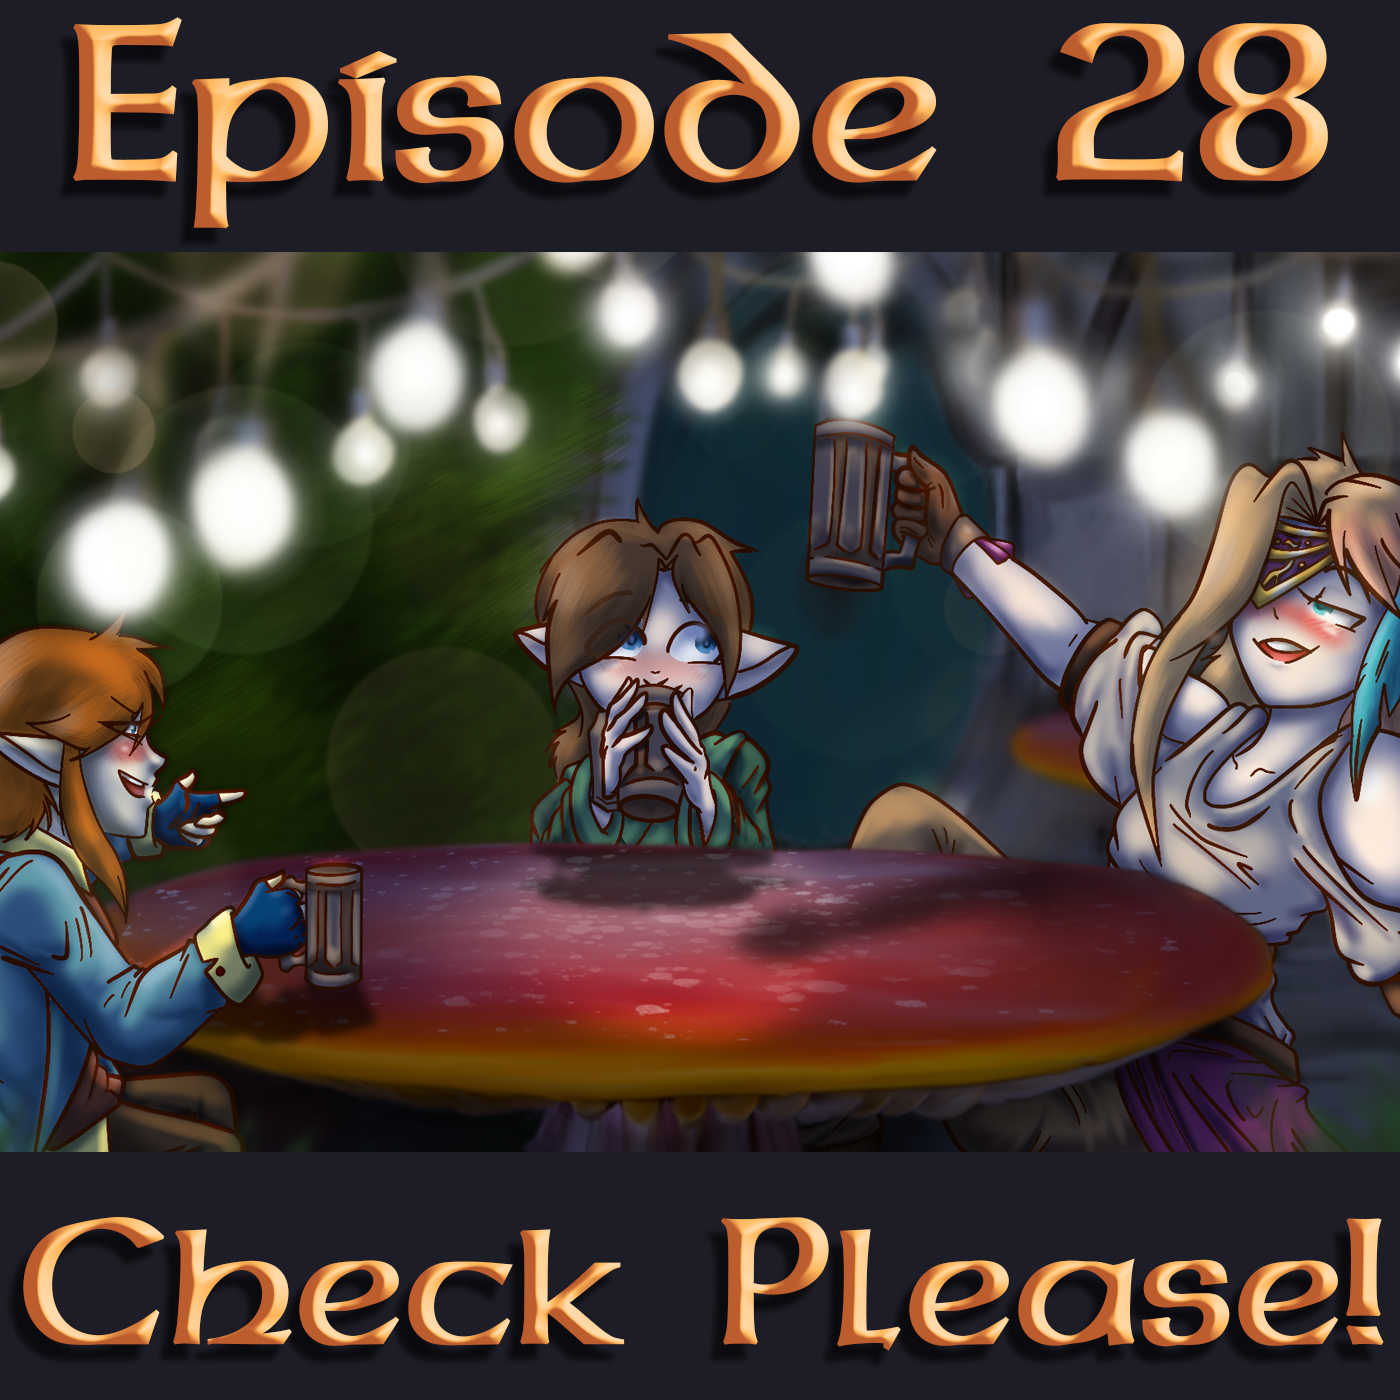 Check Please! S1 E28: The Drinking Episode